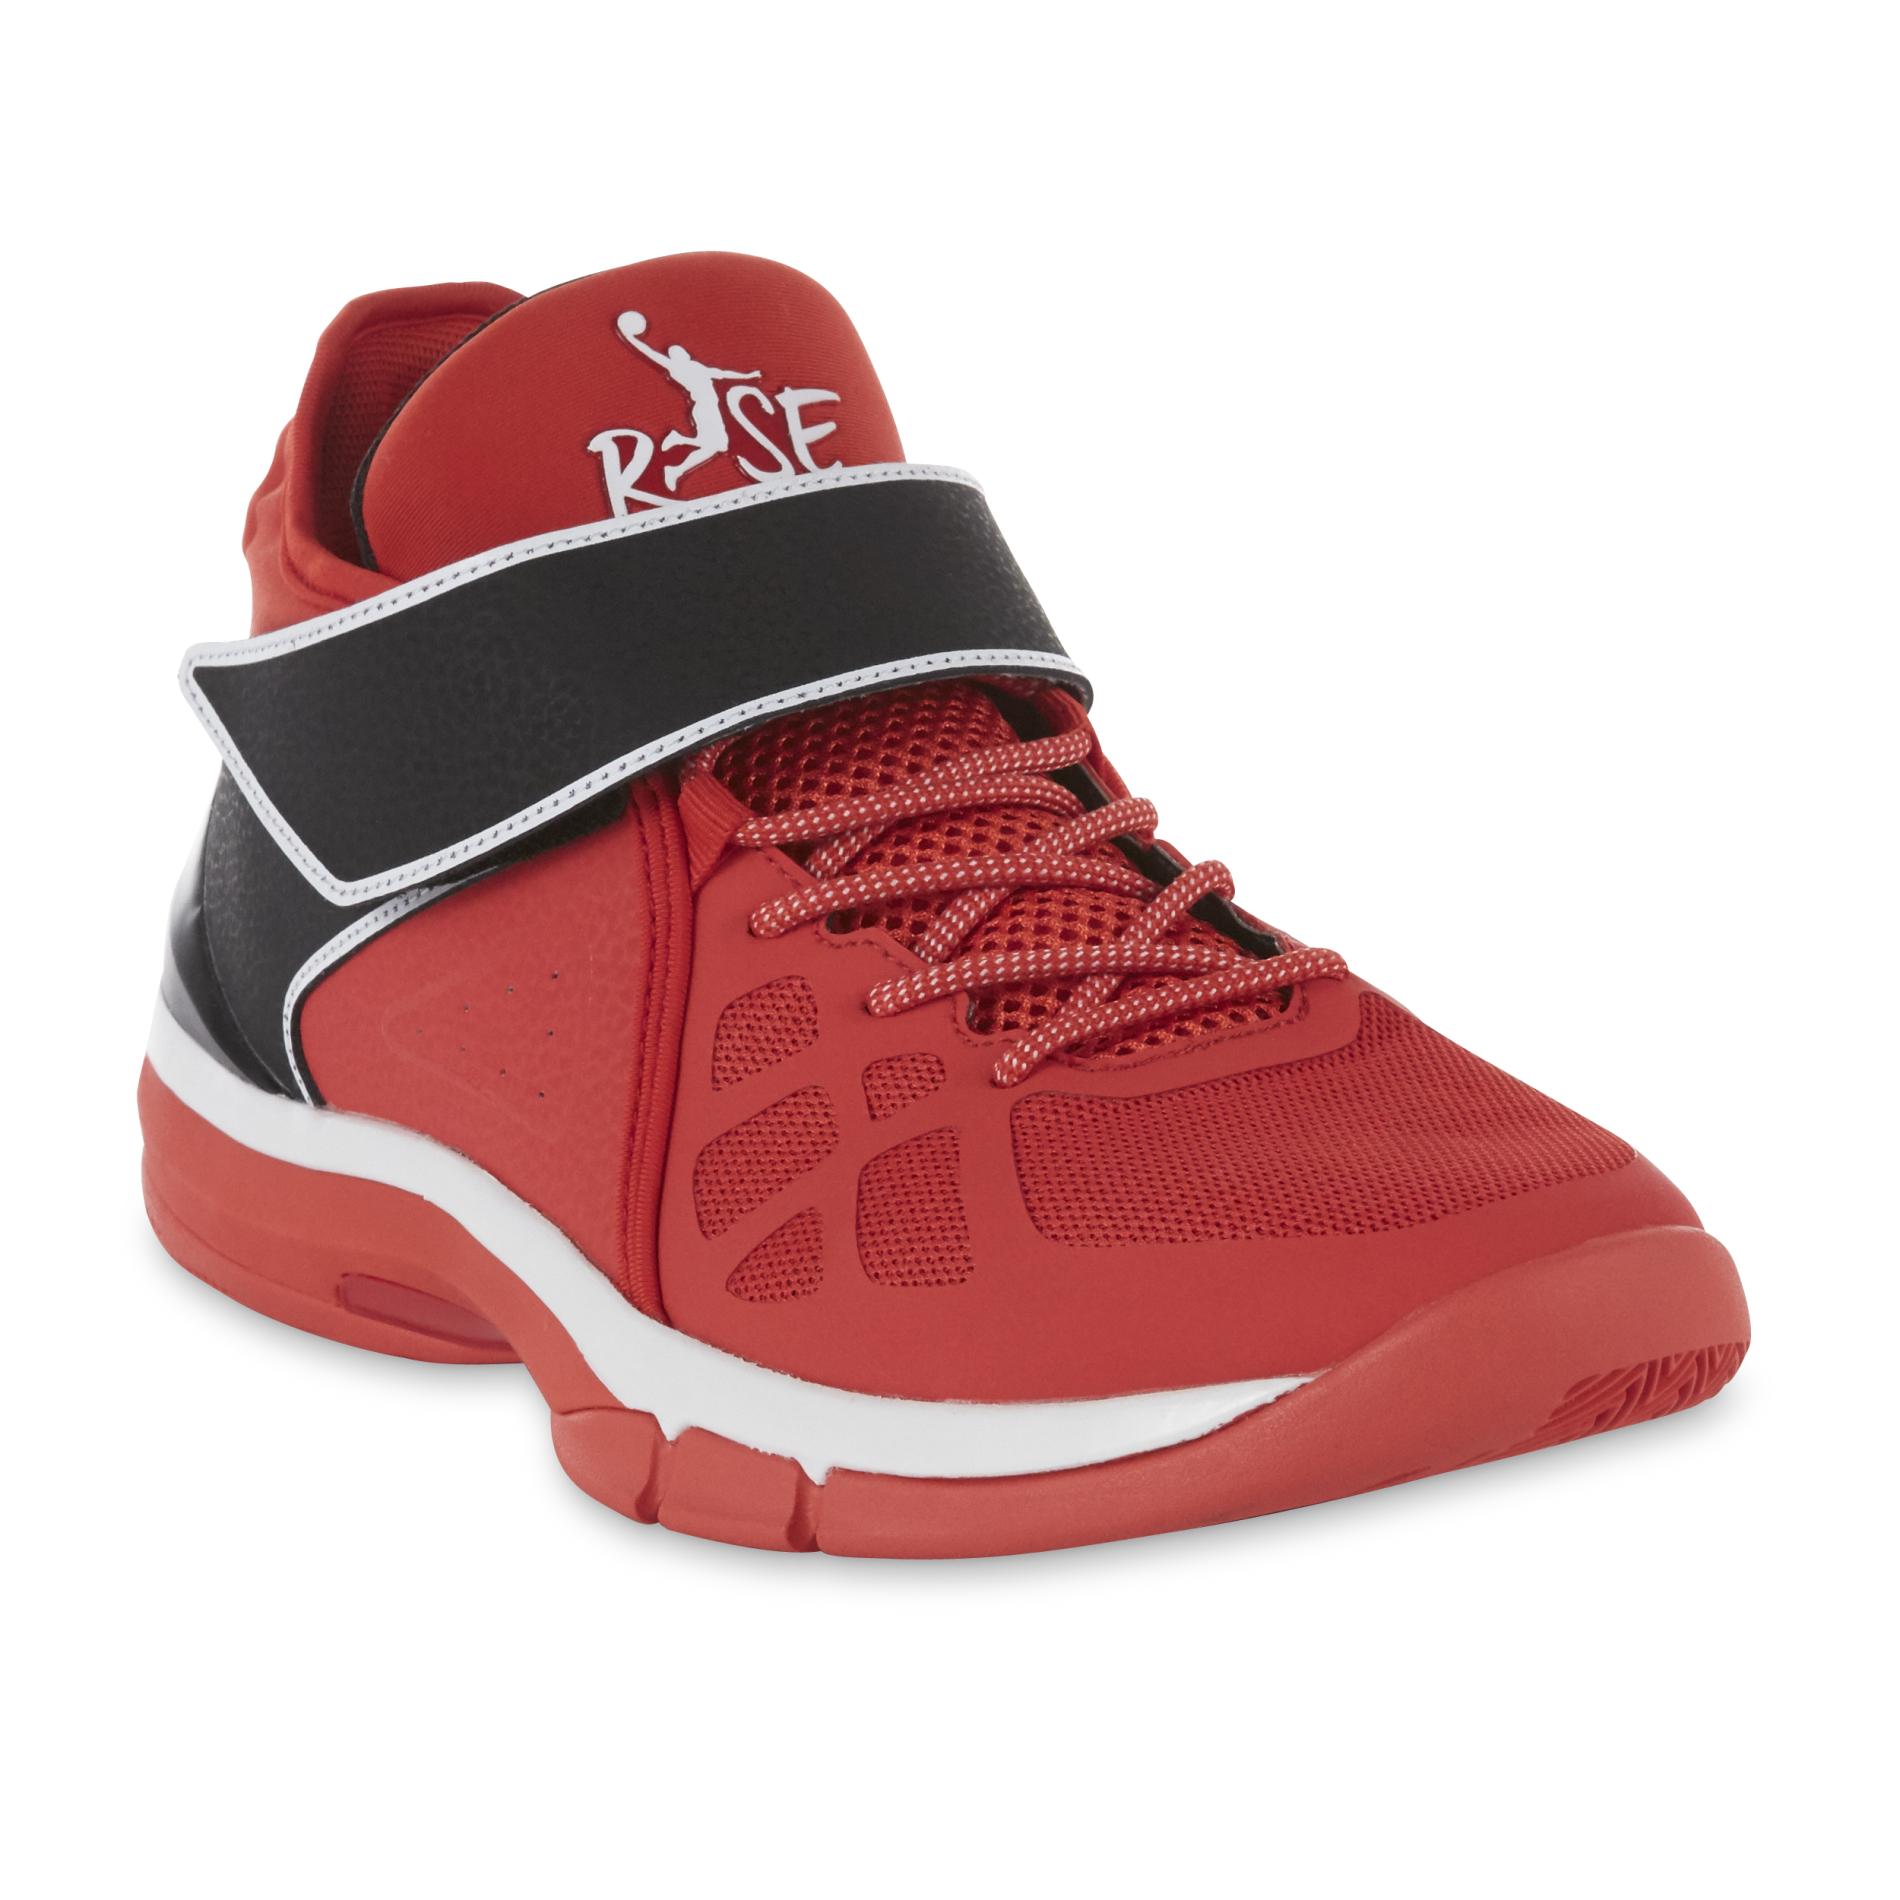 Men's Sneakers \u0026 Athletic Shoes - Kmart